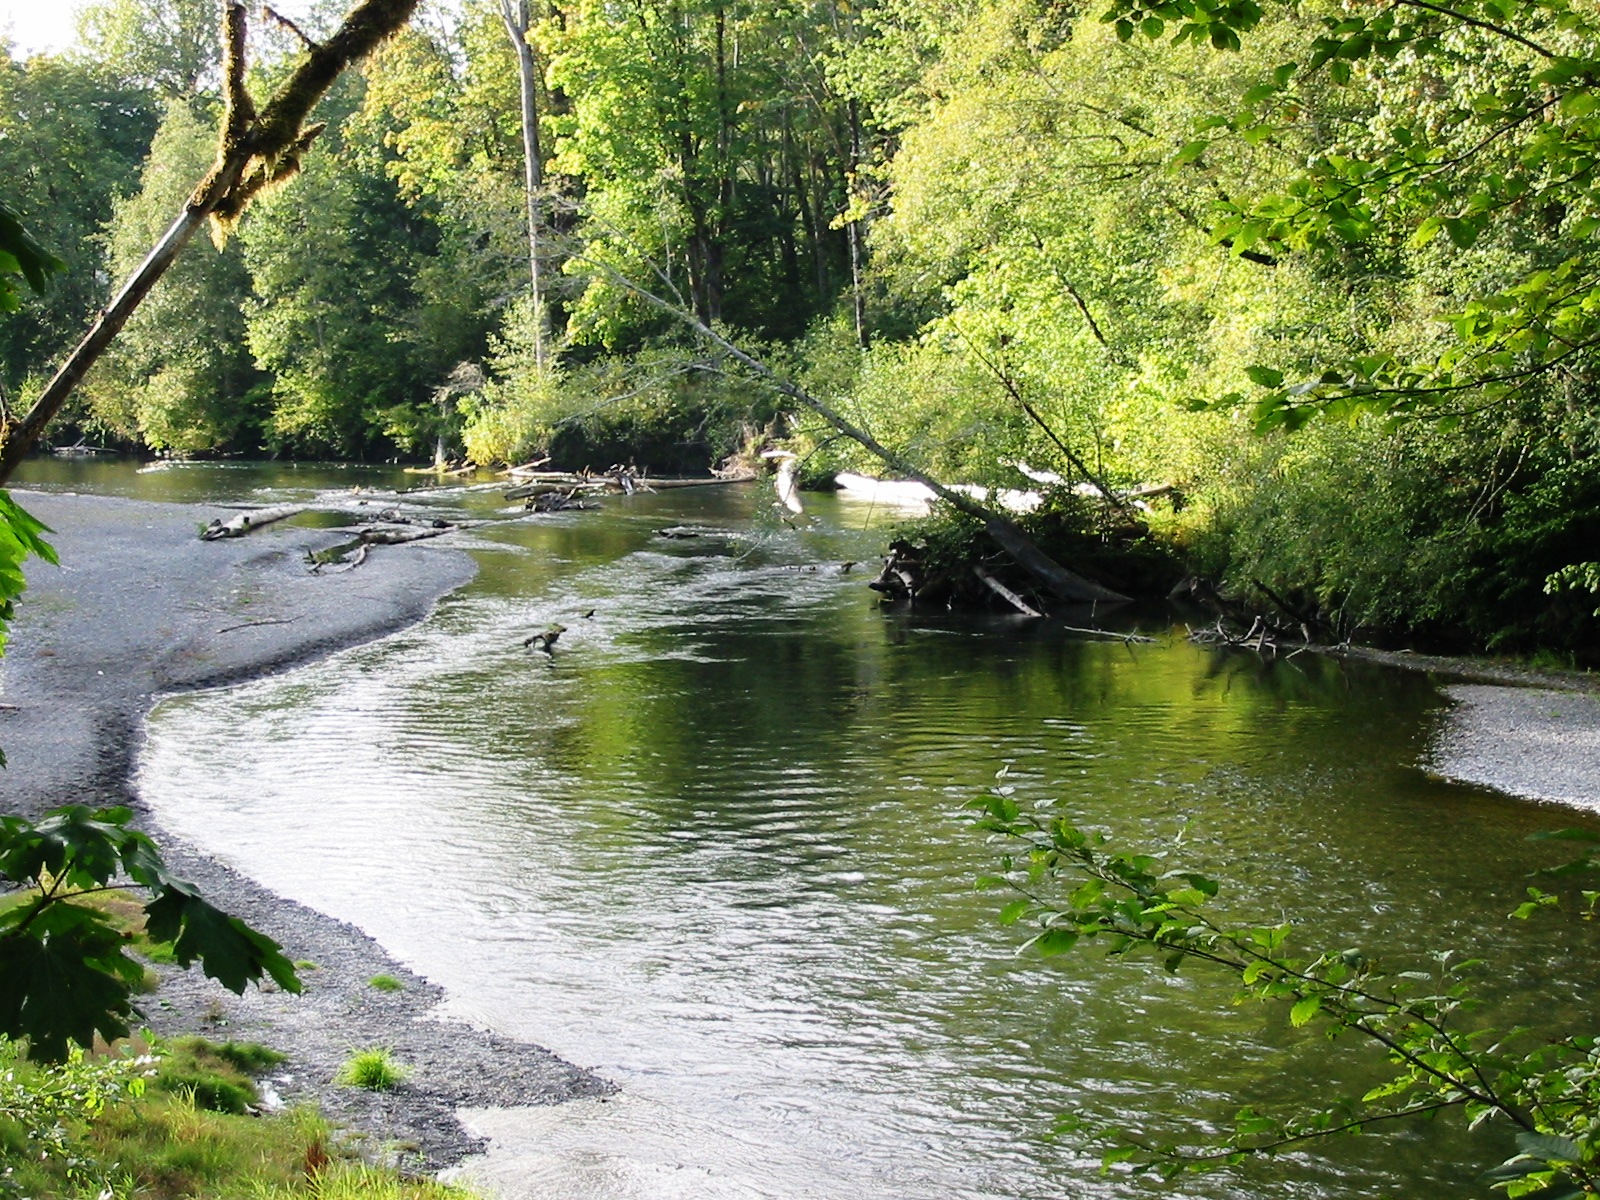 Skokomish River at a favorite Lunker Location. 